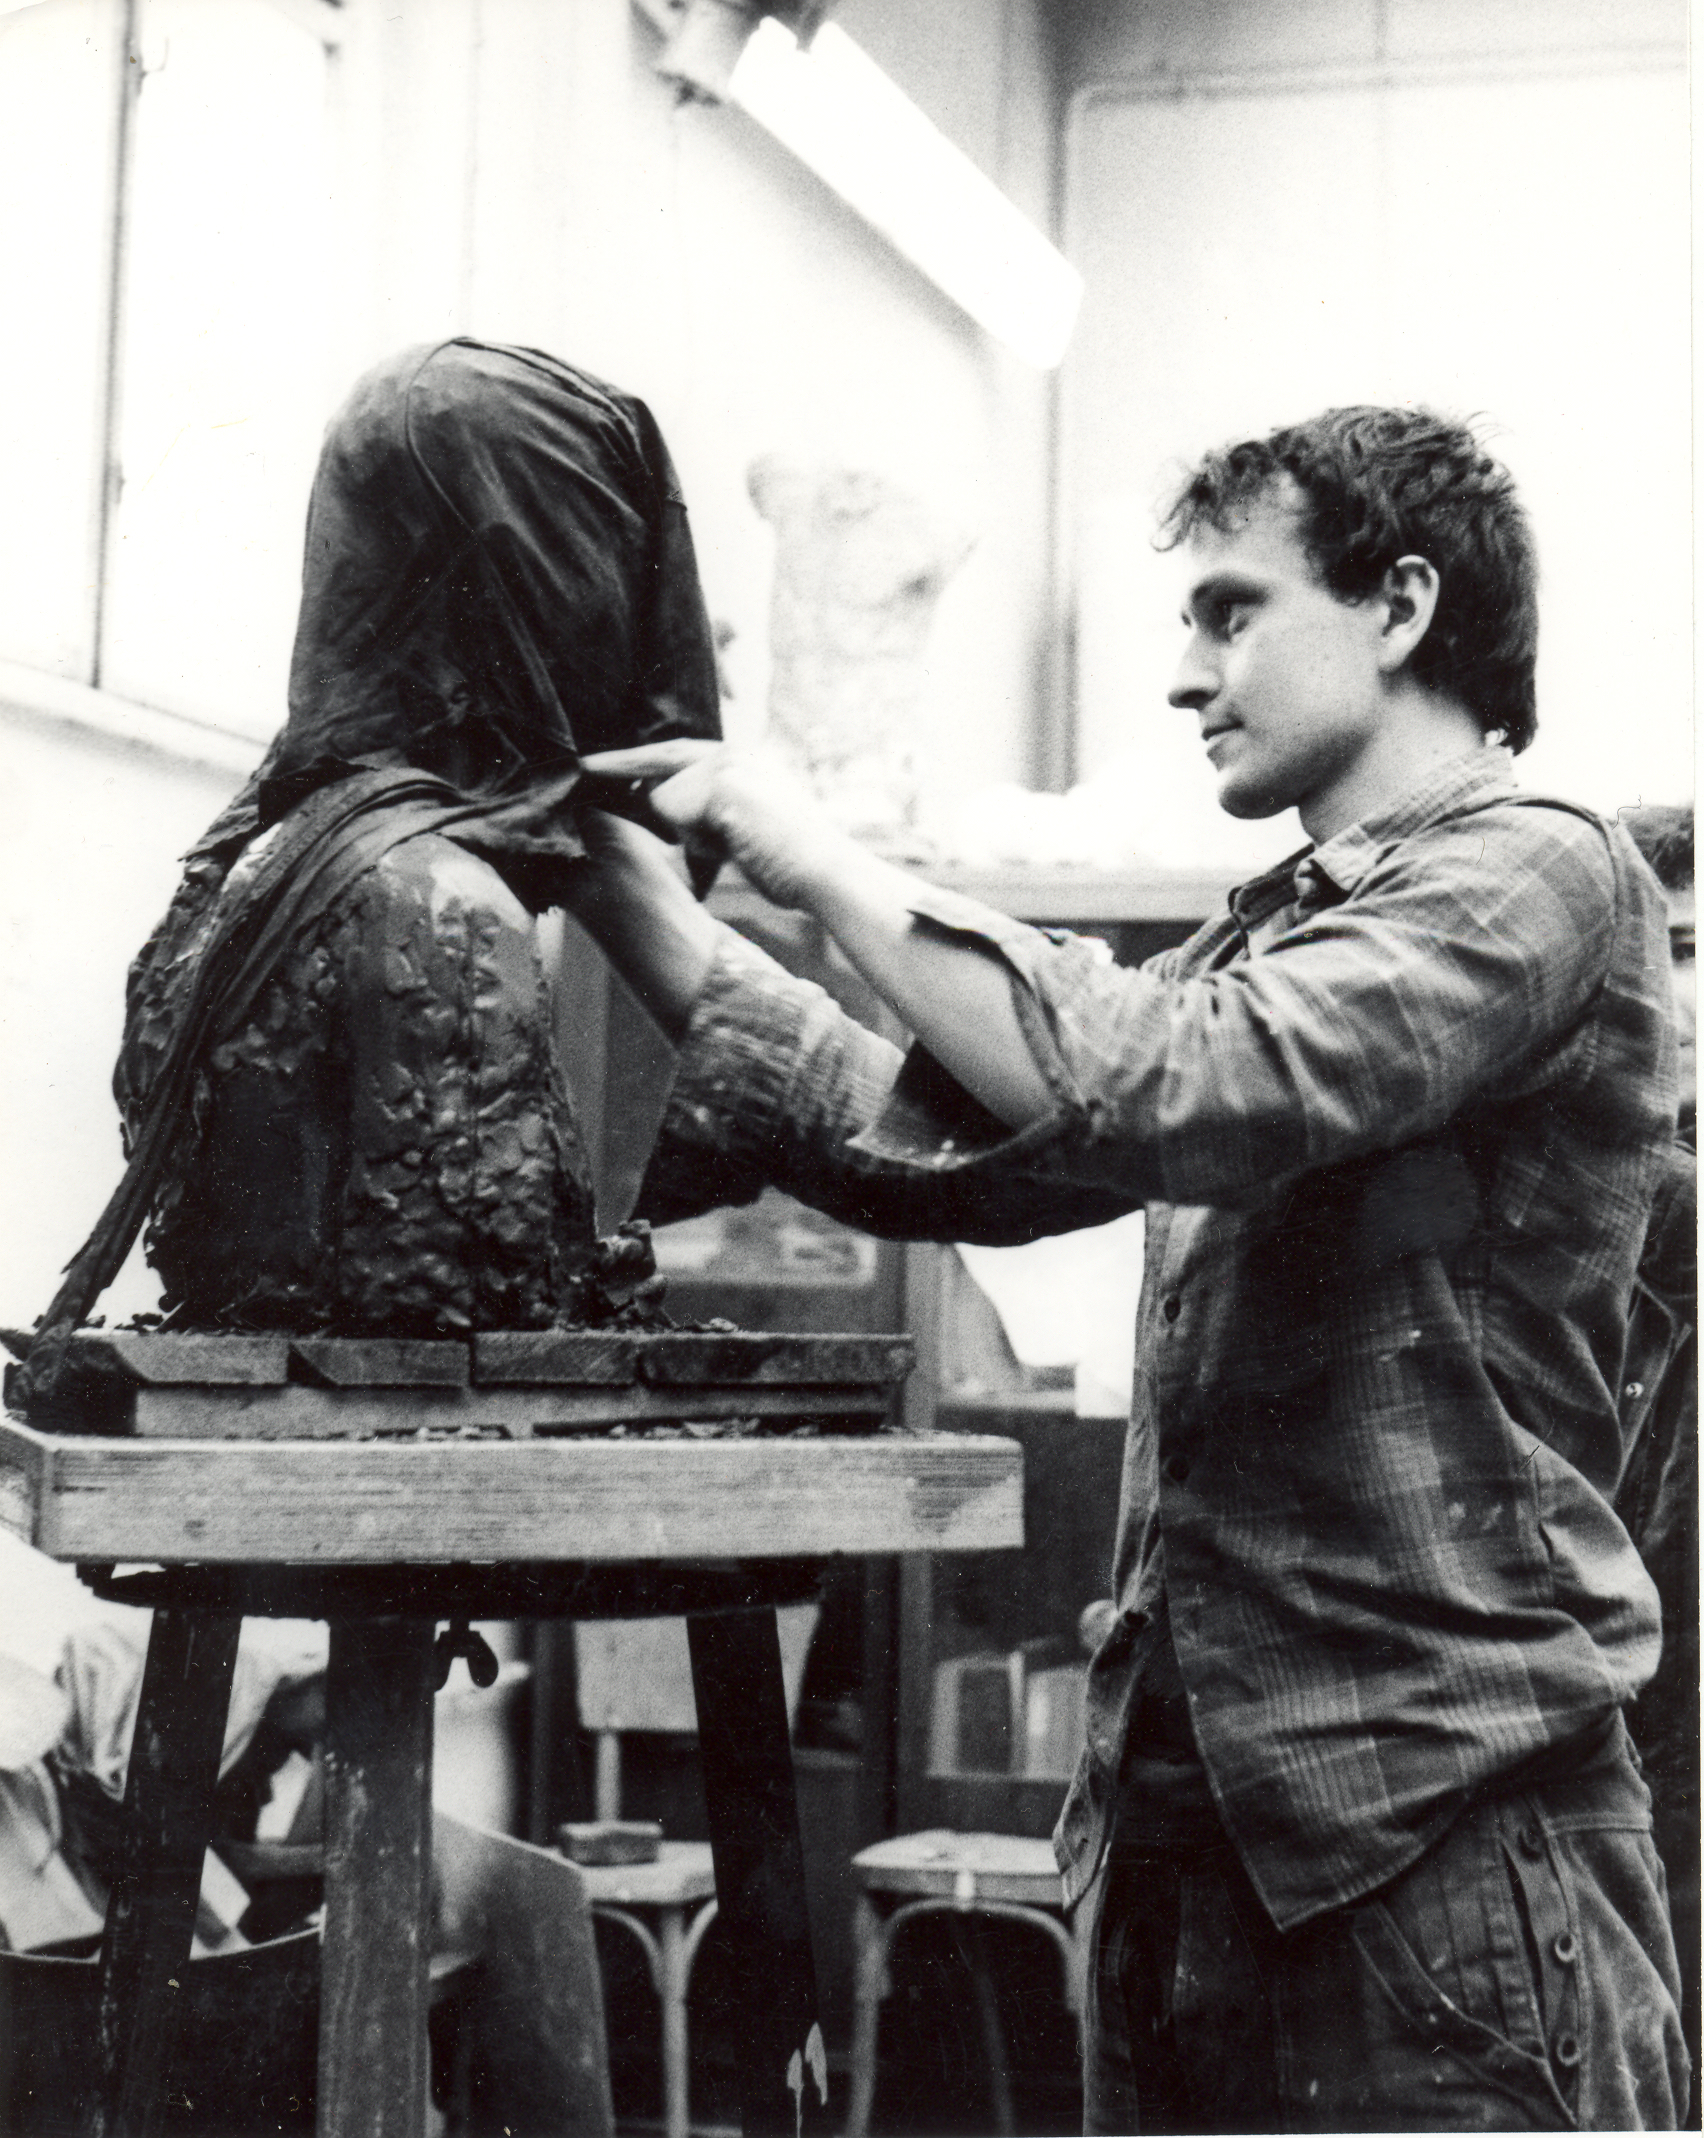 Michal Gabriel in his second year at AVU (Academy of Fine Arts in Prague) in the studio of the sculptor Kryštůfek